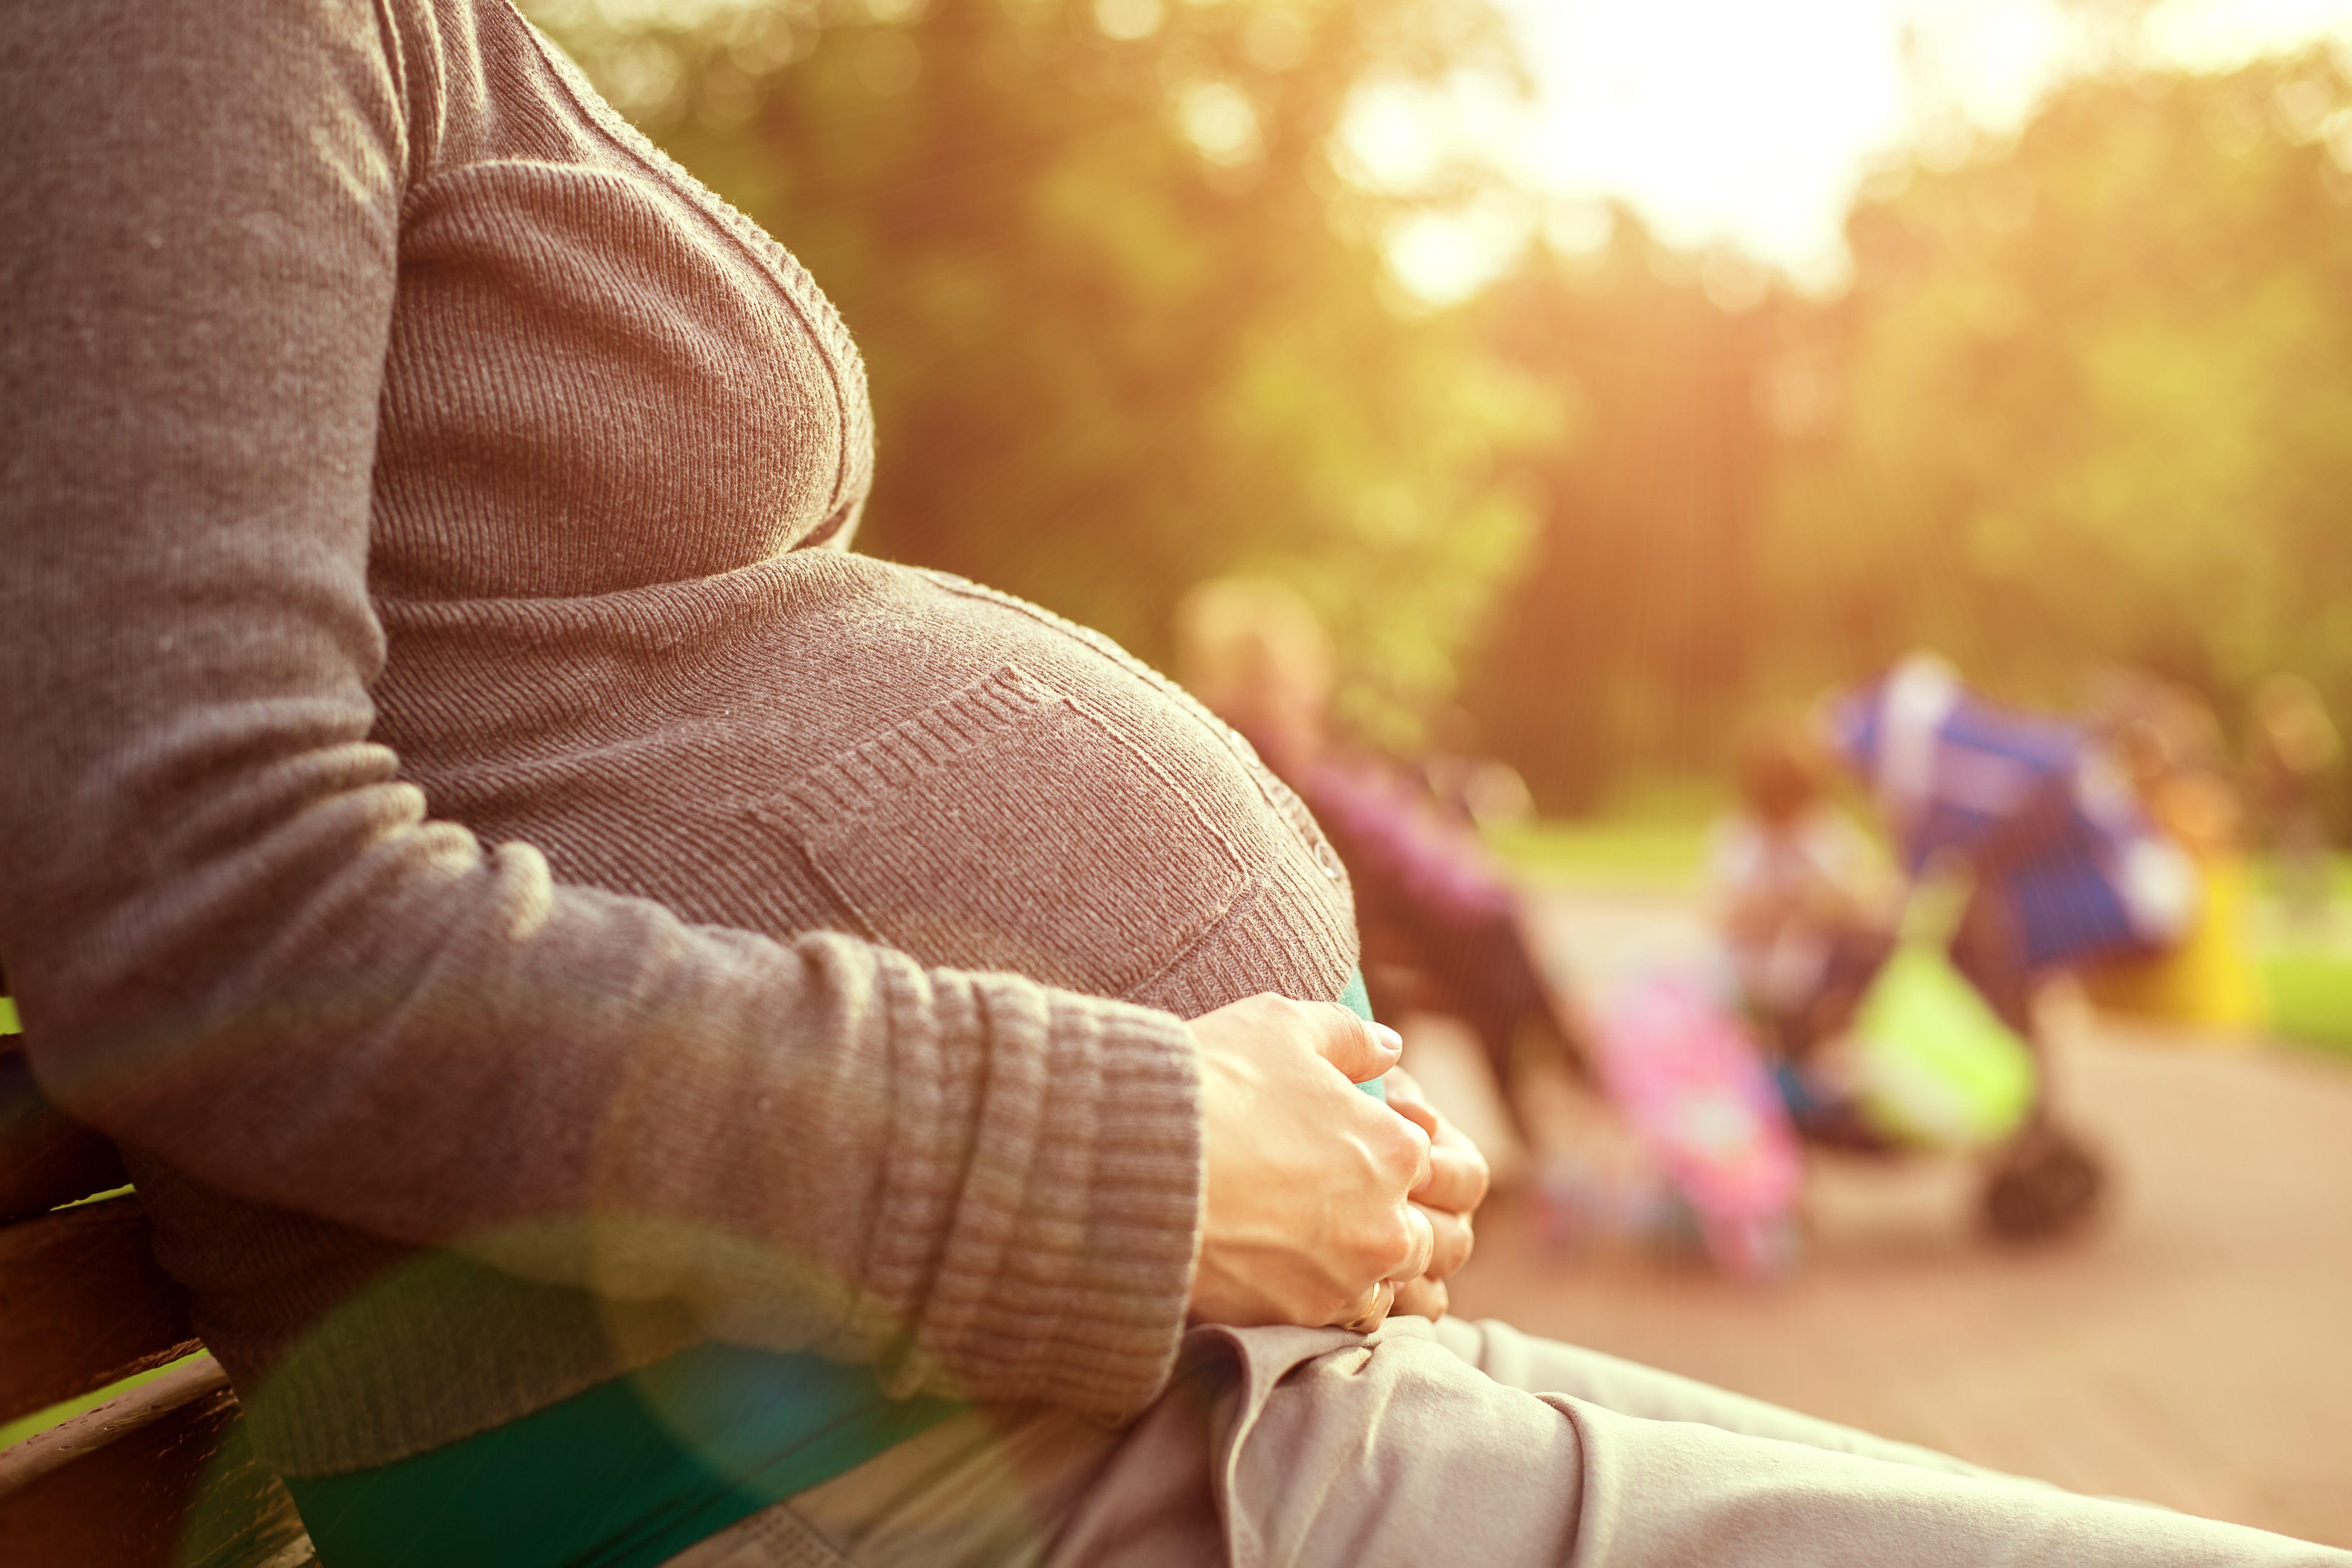 Vientre de mujer embarazada. | Foto: Shutterstock